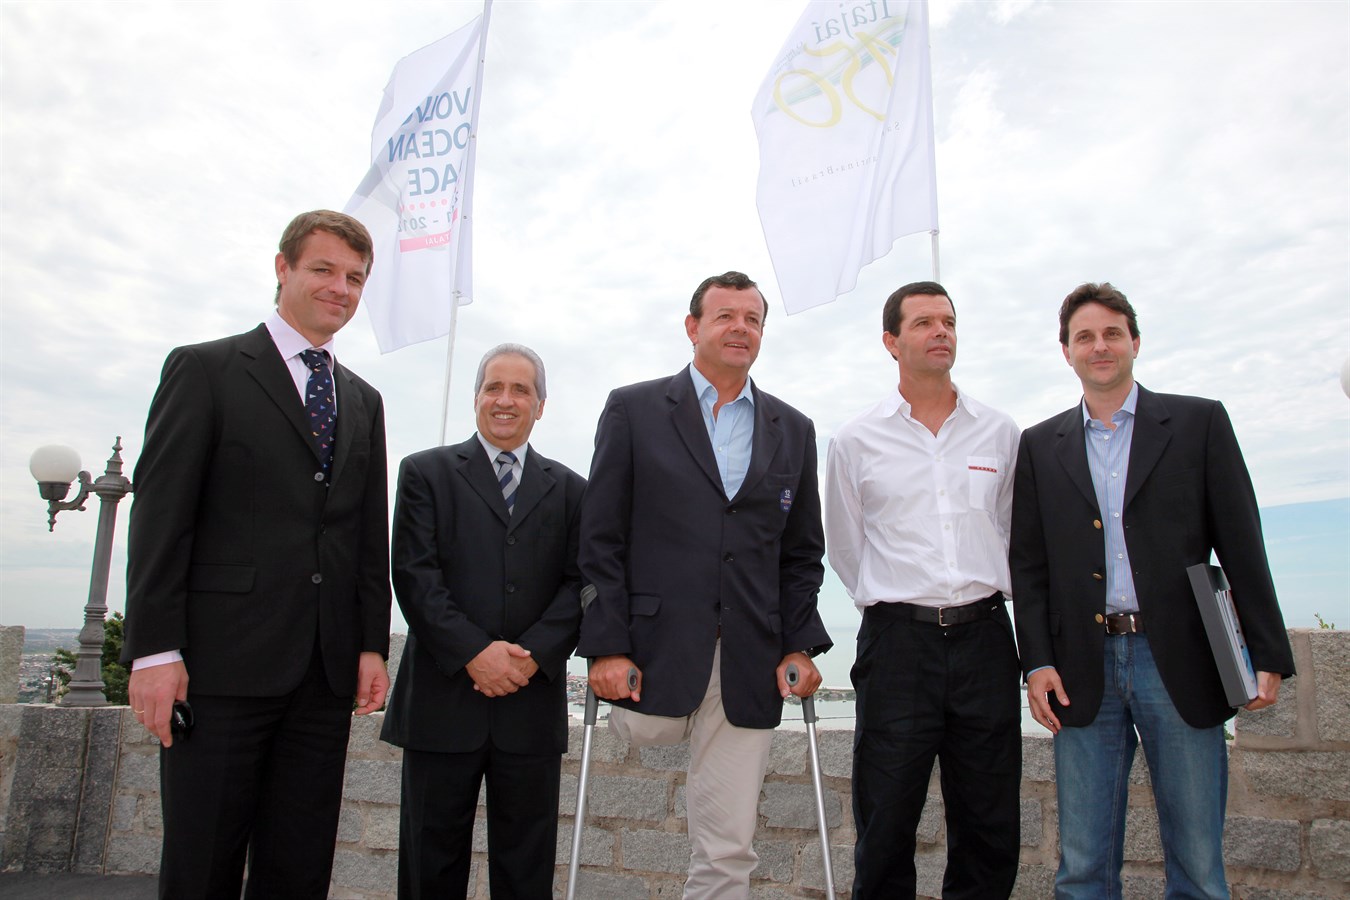 Brazil, Itajai will be hosting a stopover for the 2011-12 Volvo Ocean Race